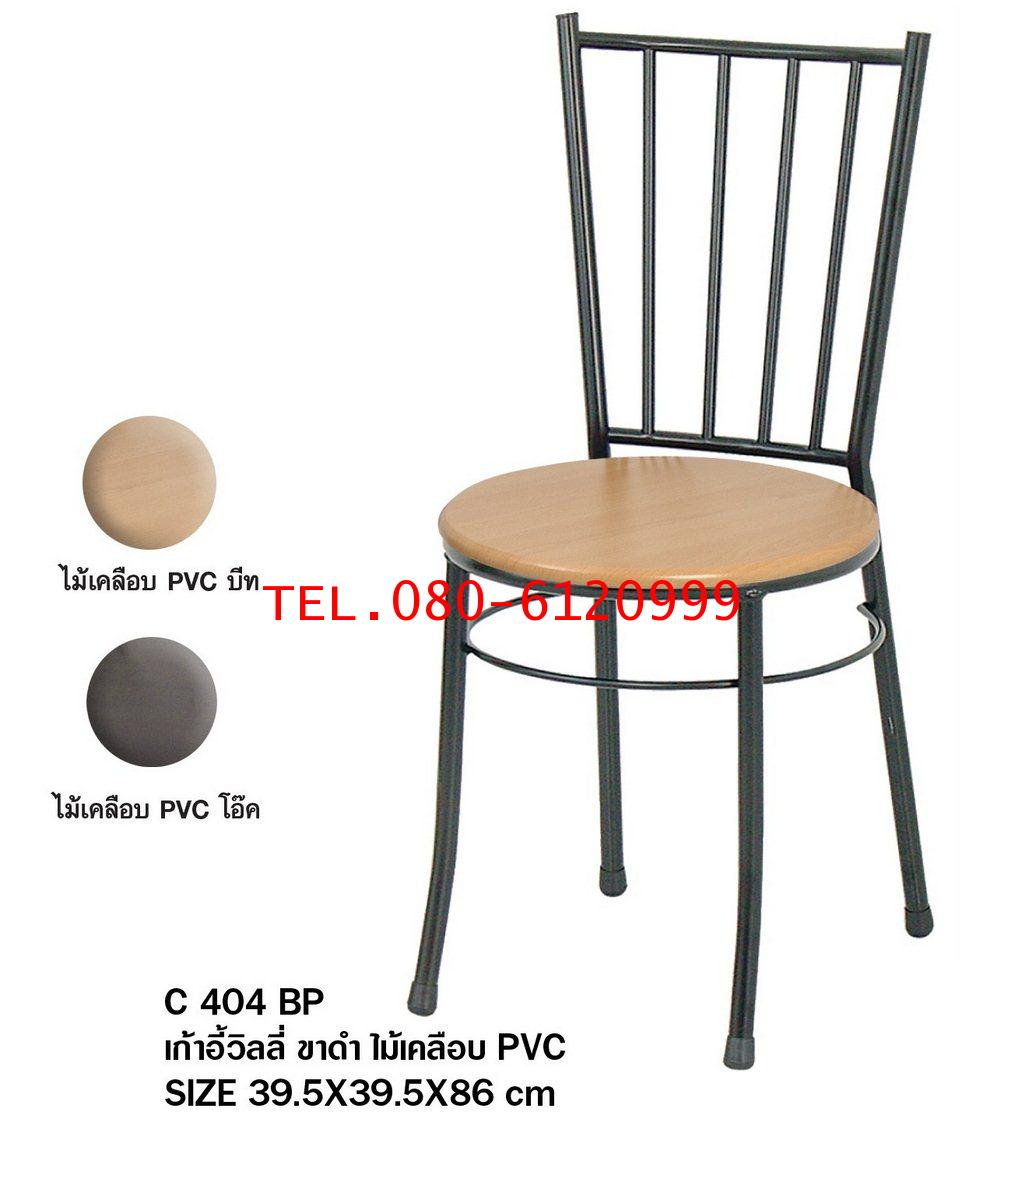 pmy29-22 เก้าอี้วิลลี่ ขาดำ หน้าไม้เคลือบ PVC